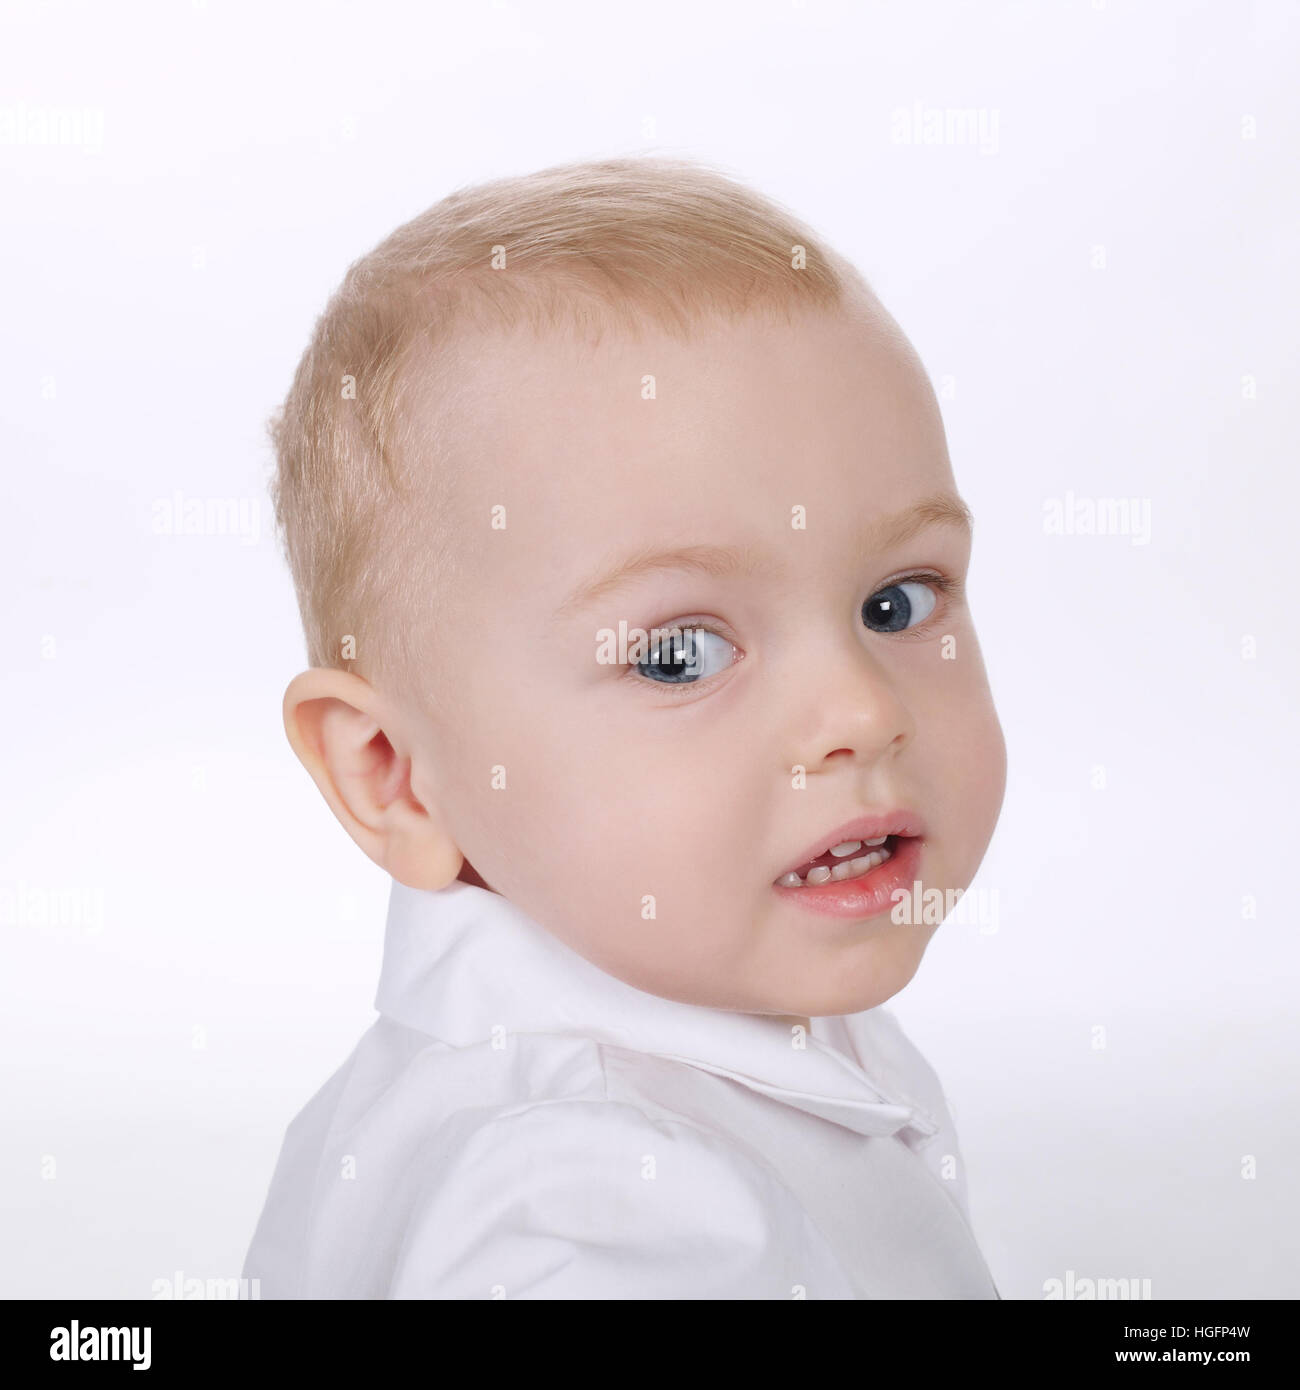 little boy portrait on white background Stock Photo - Alamy